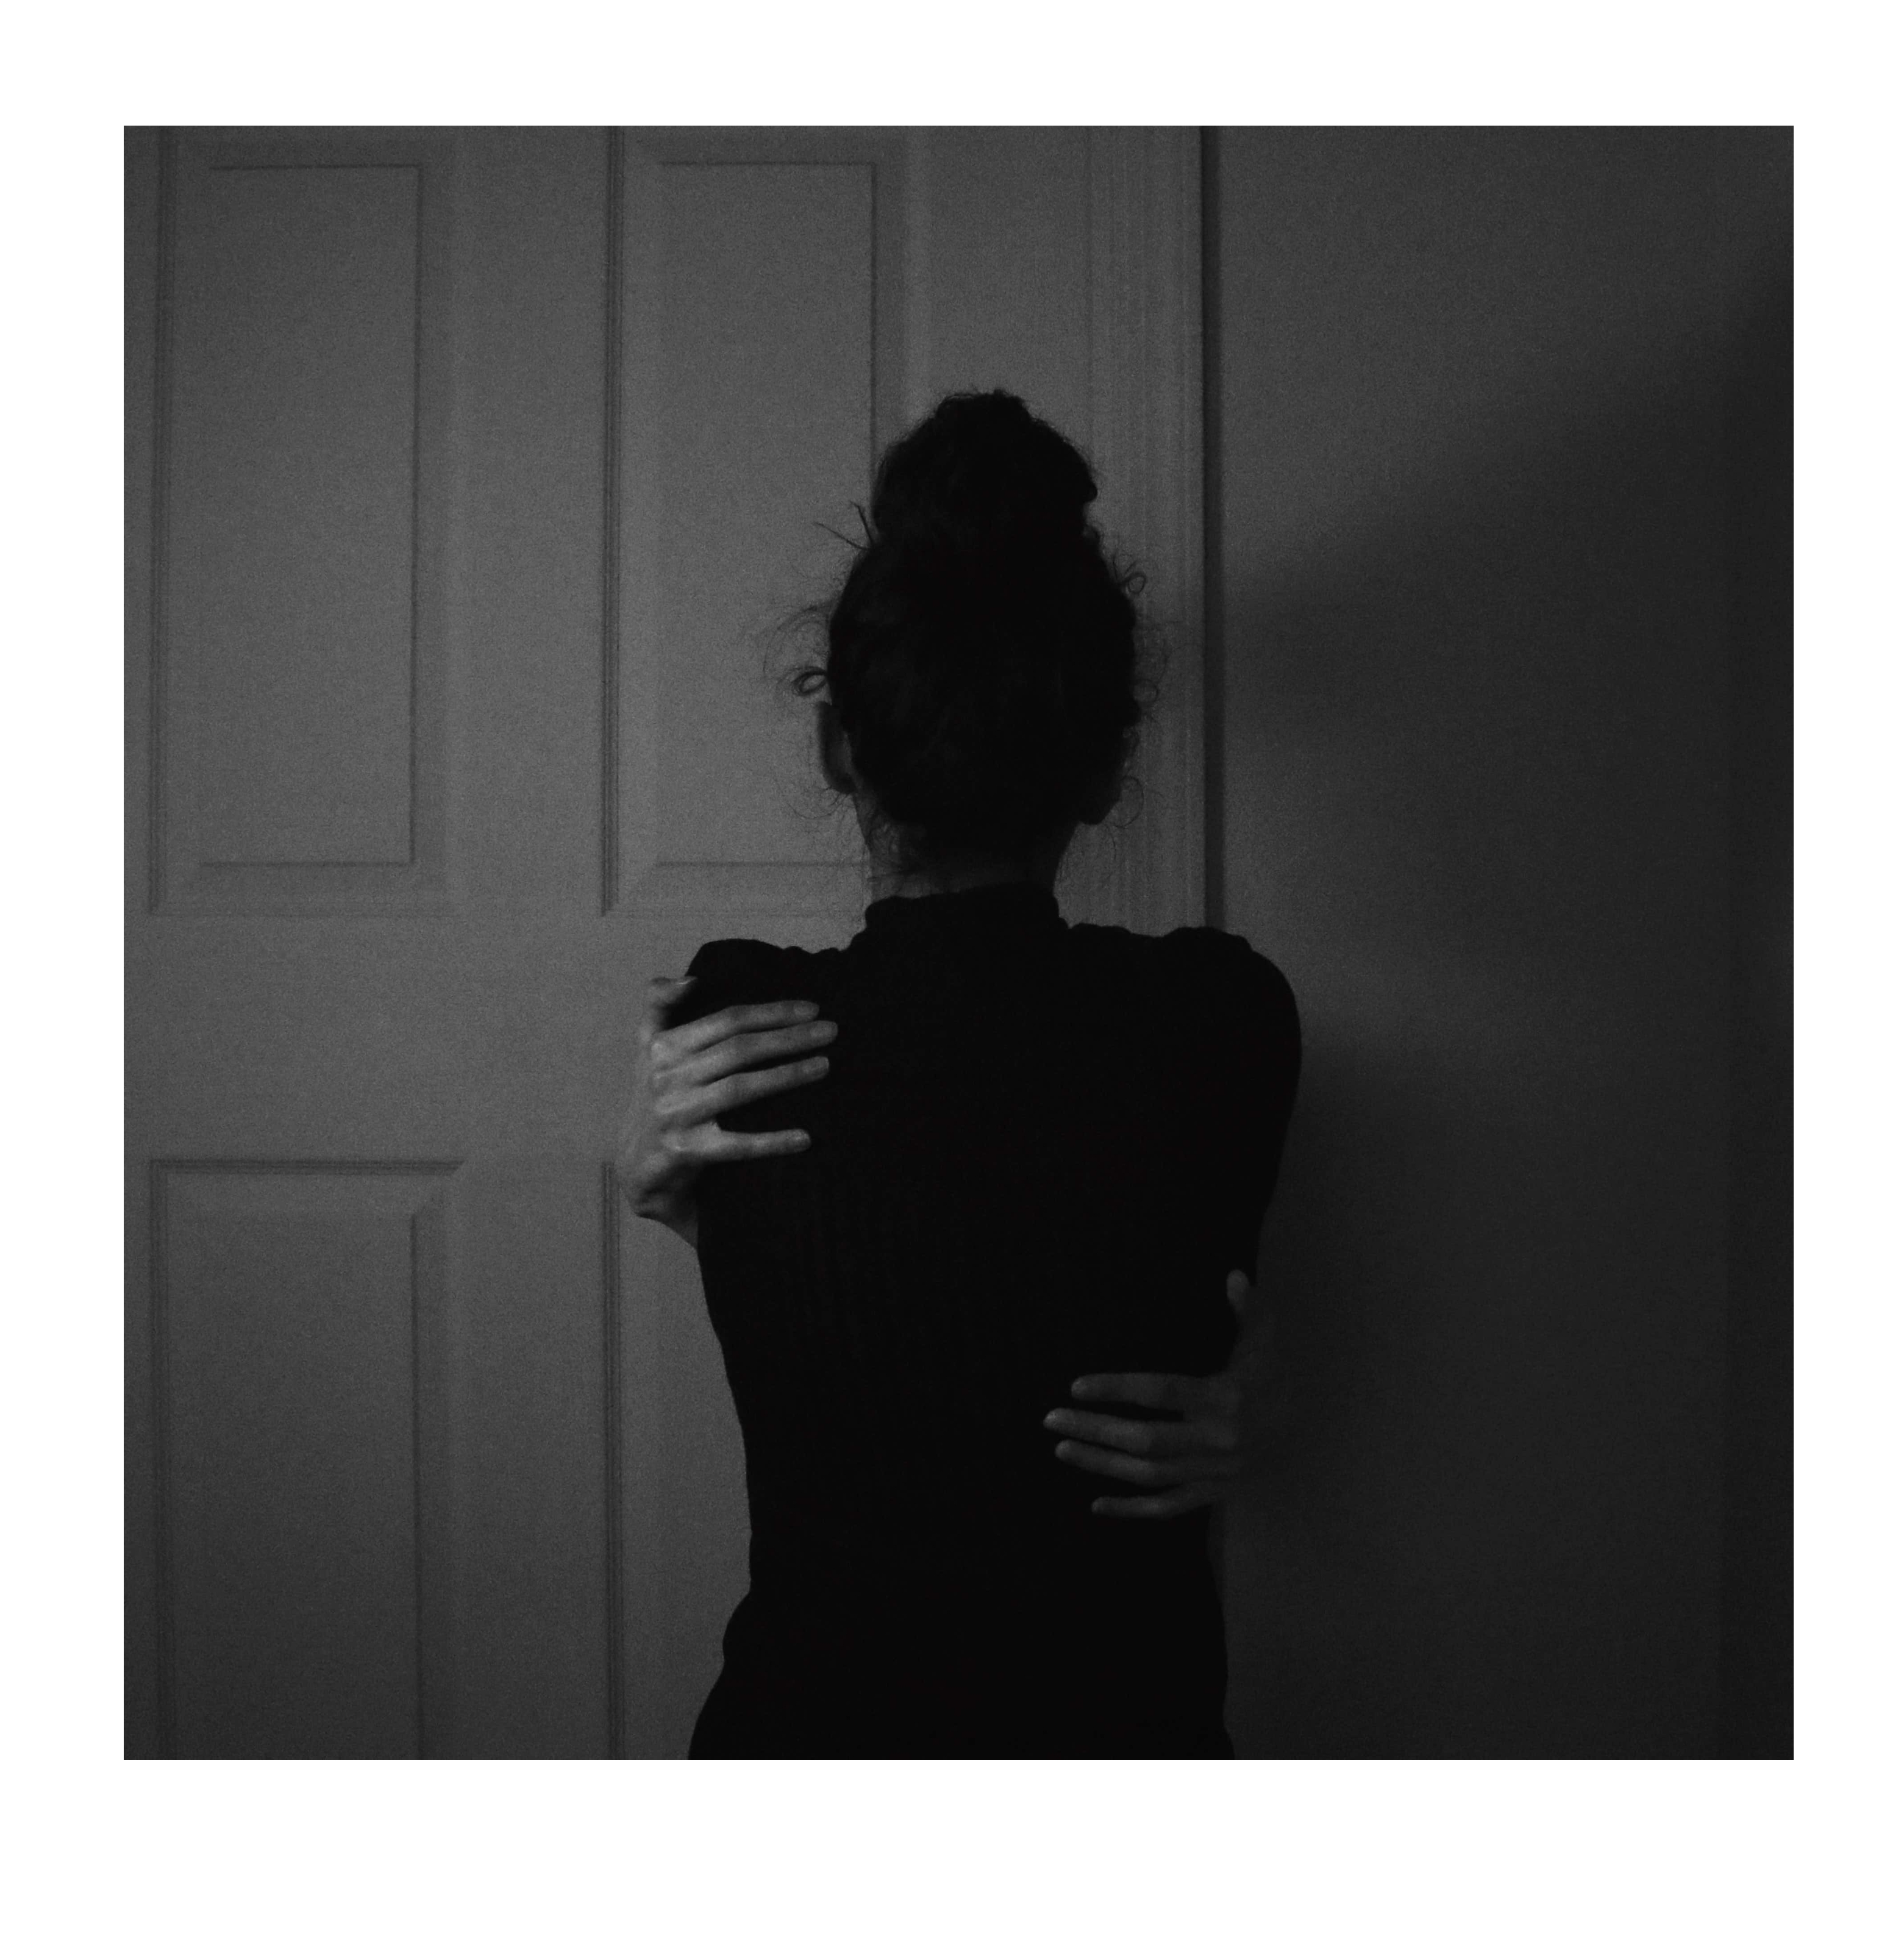 Self hug by Hala Al Asadi